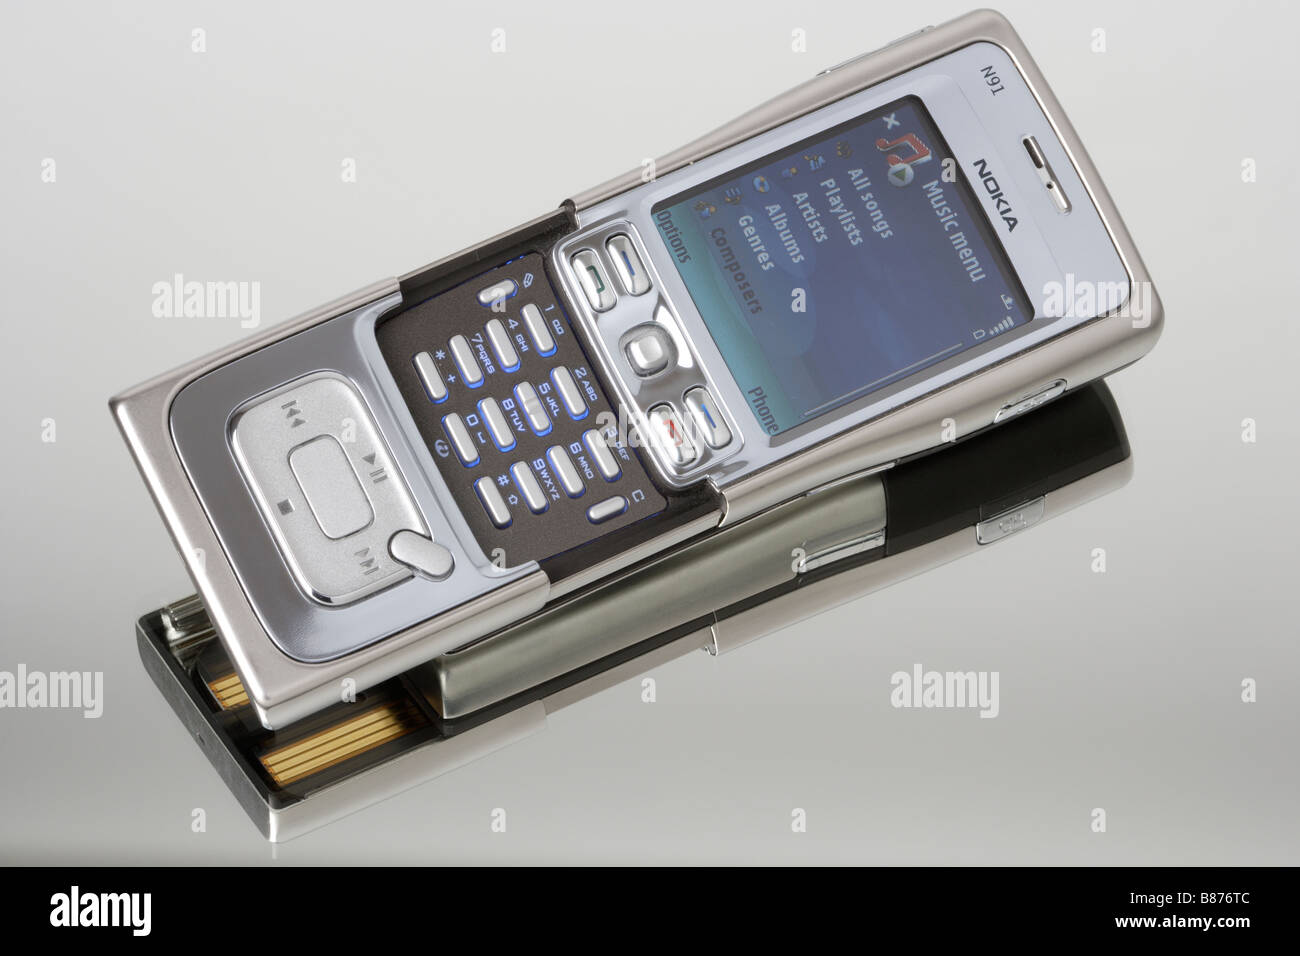 Nokia Telefono cellulare cellulare music player Foto Stock